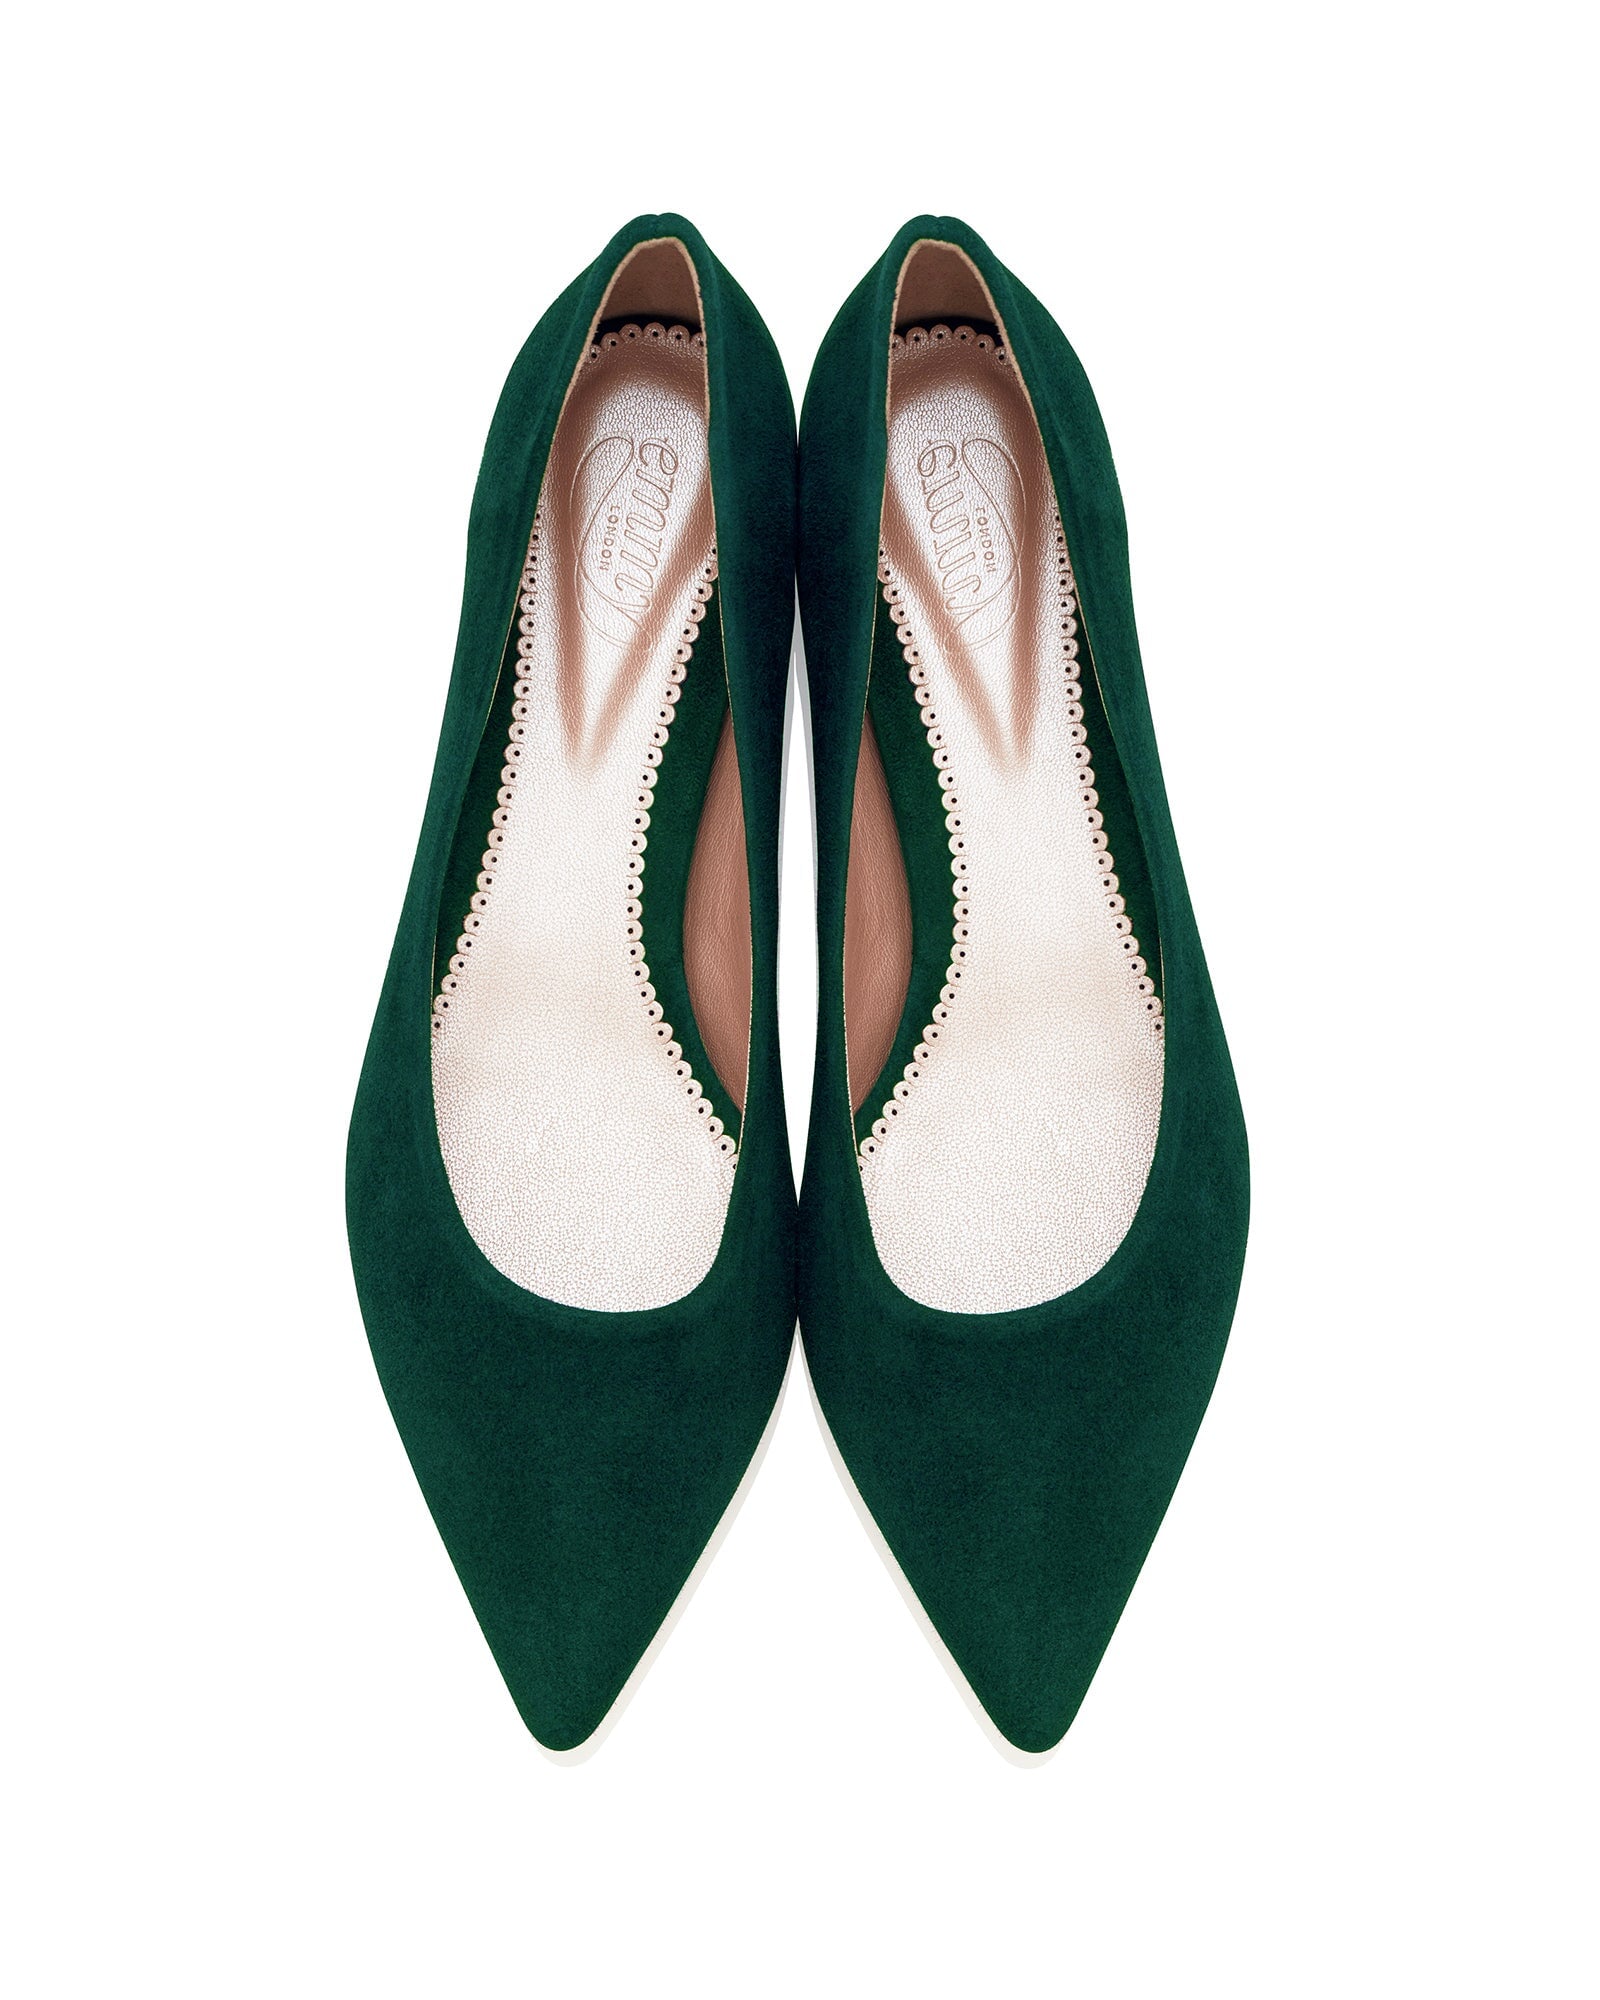 Lulu Greenery Fashion Shoe Green Suede Pointed Flat  image